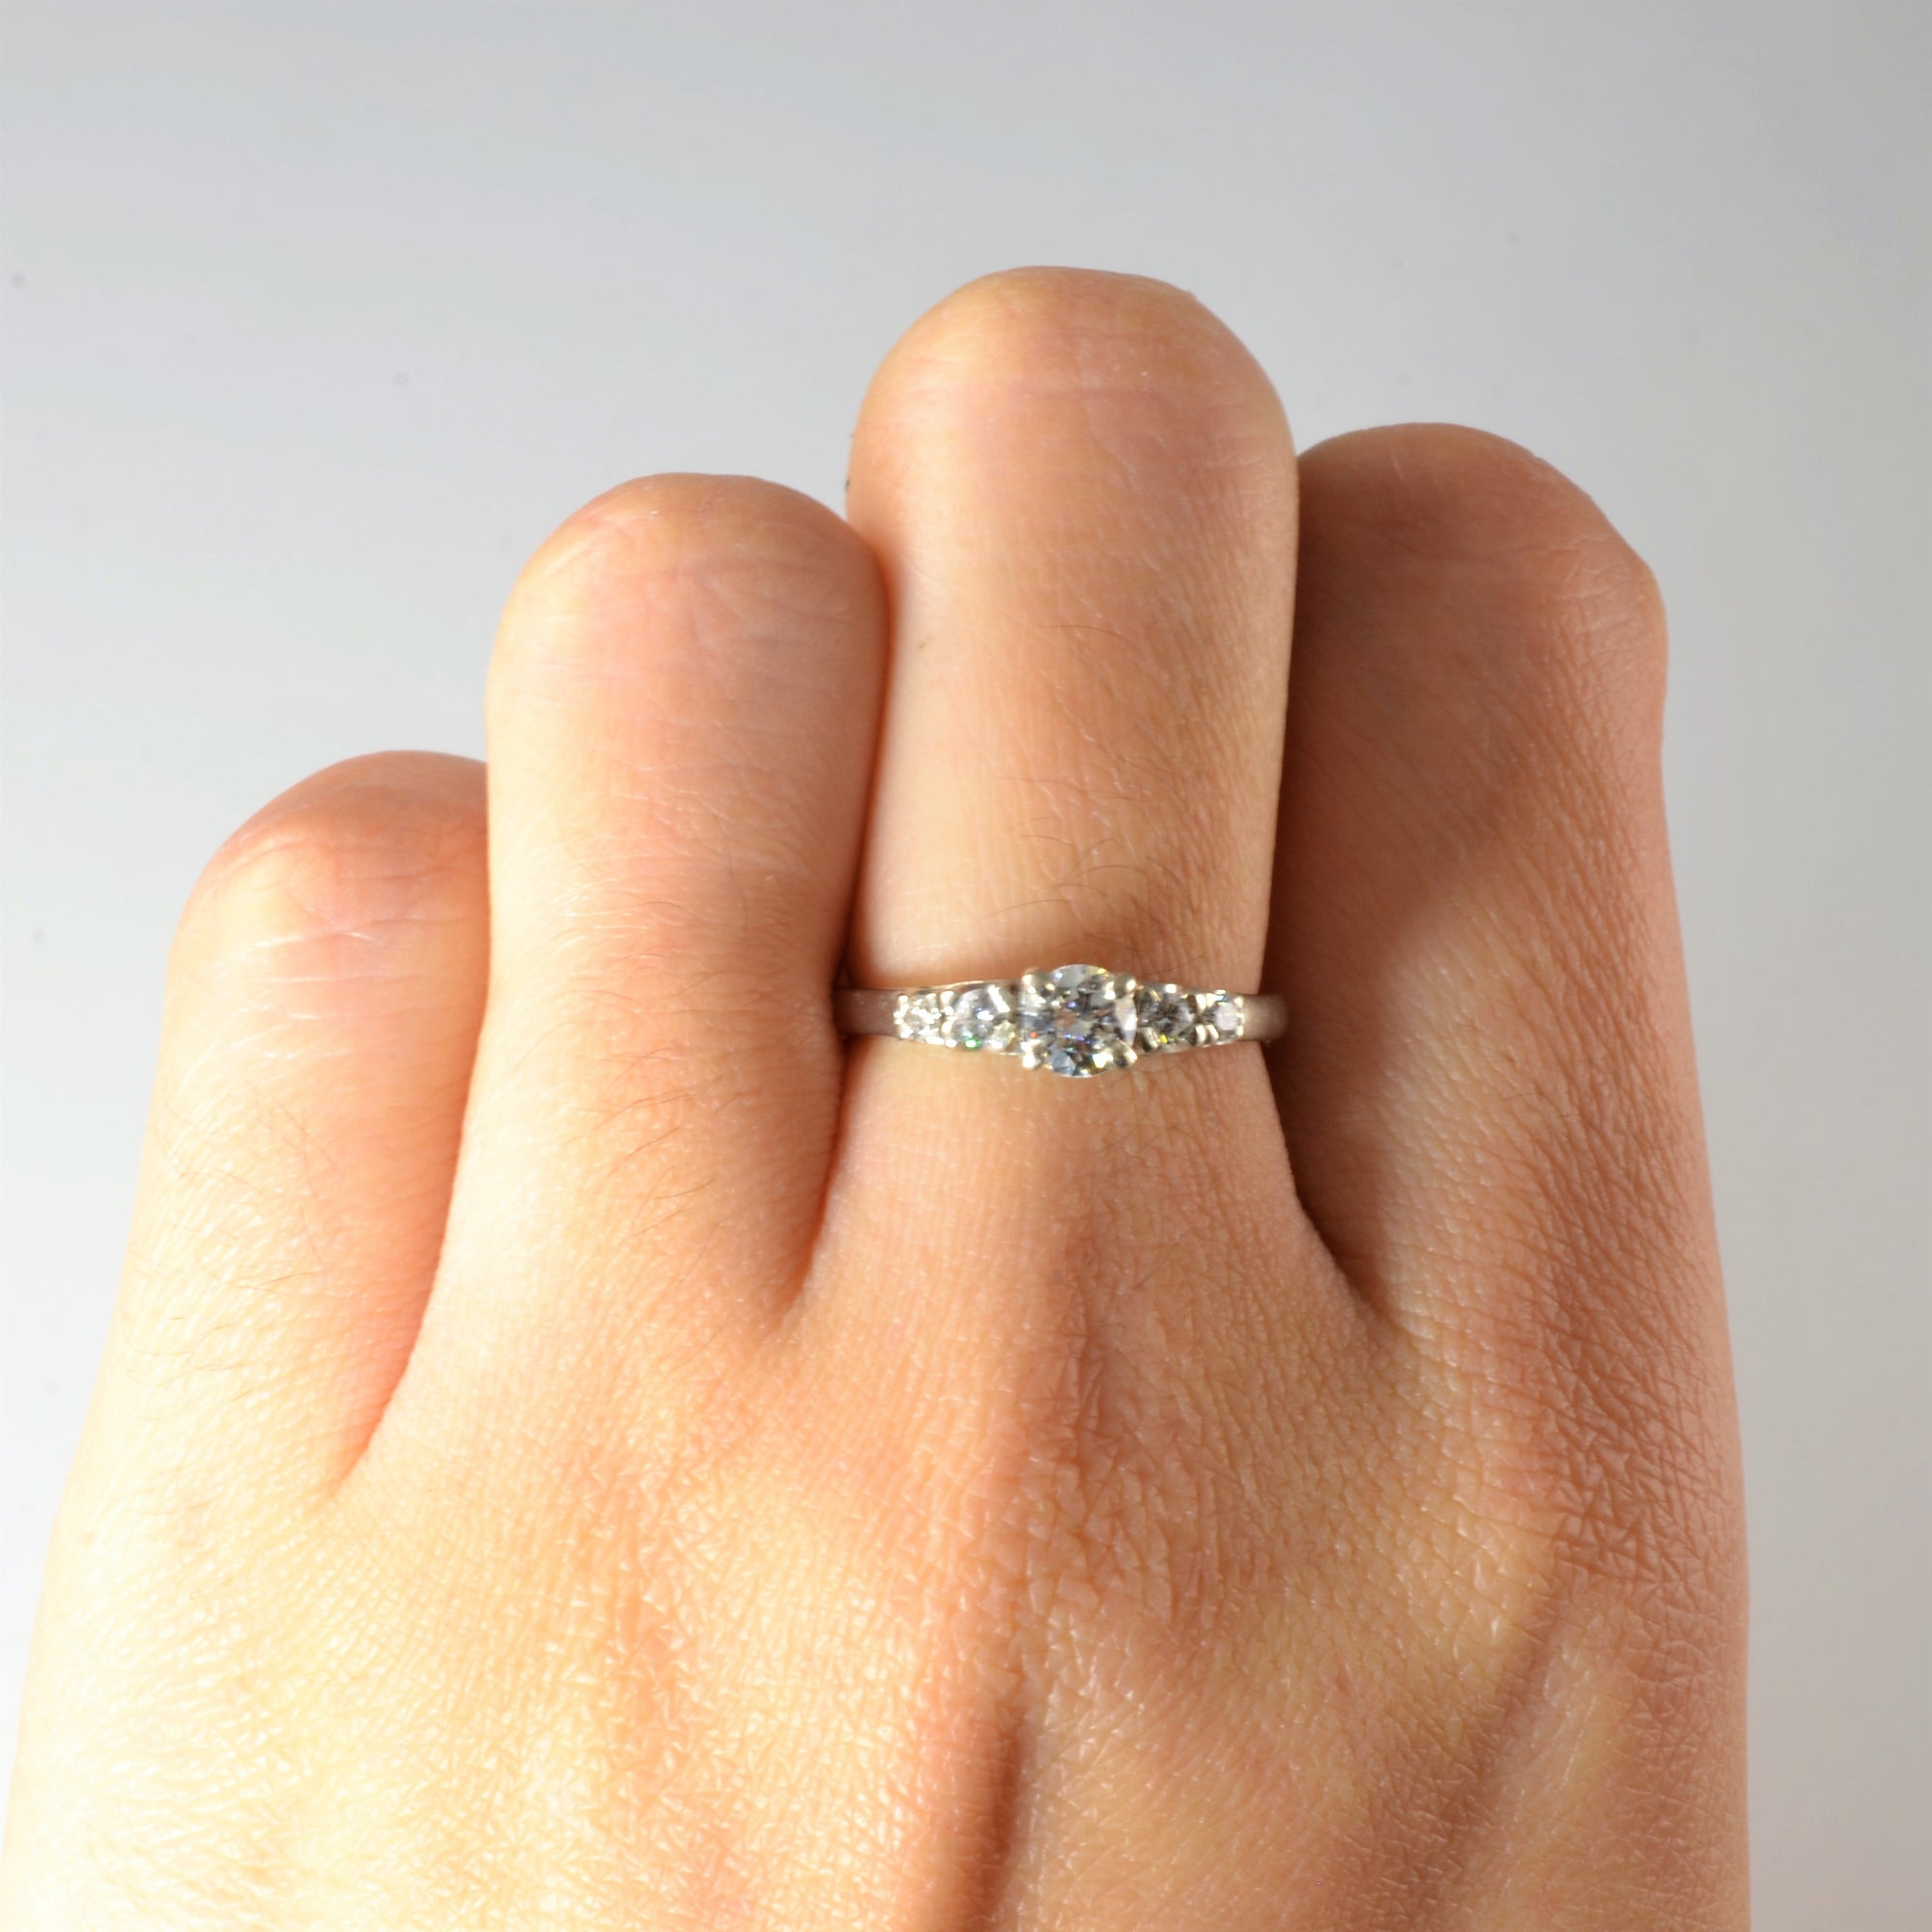 'Birks' 1930s Five Stone Diamond Ring | 0.41ctw | SZ 5.75 |